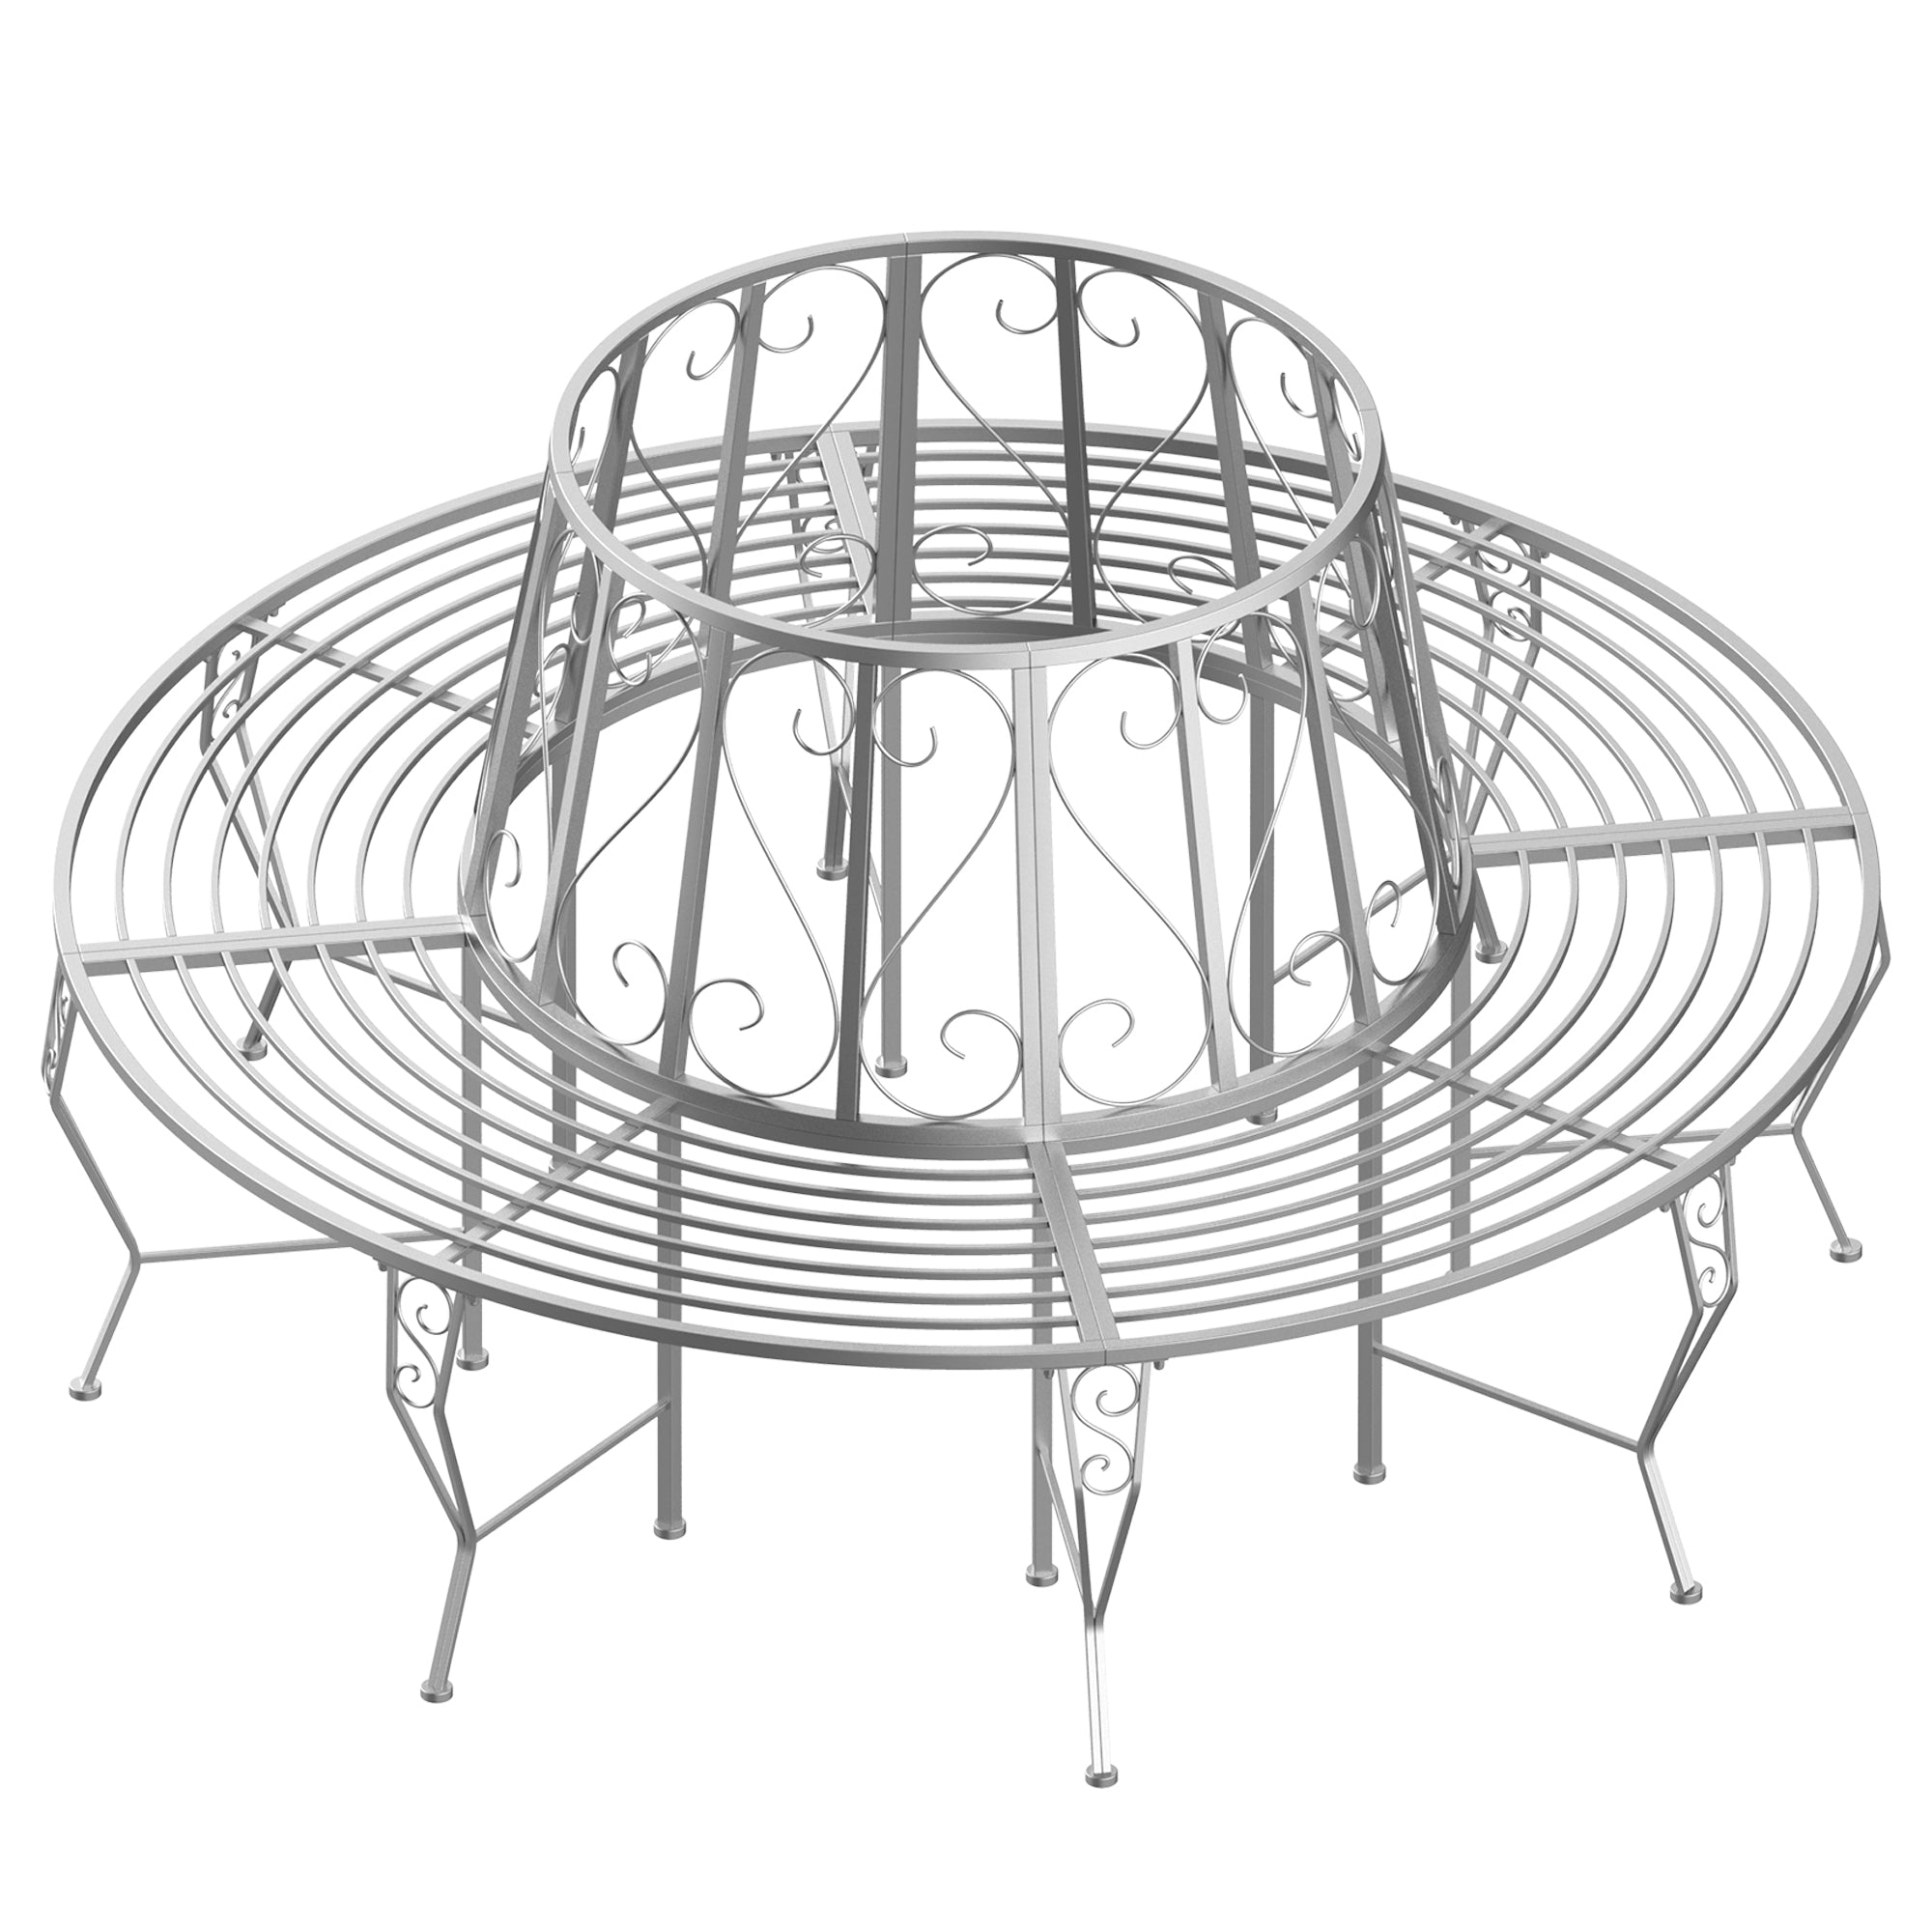 Outdoor Garden Metal Round Tree Bench Seat Diameter 160cm Height 90cm Silver-0